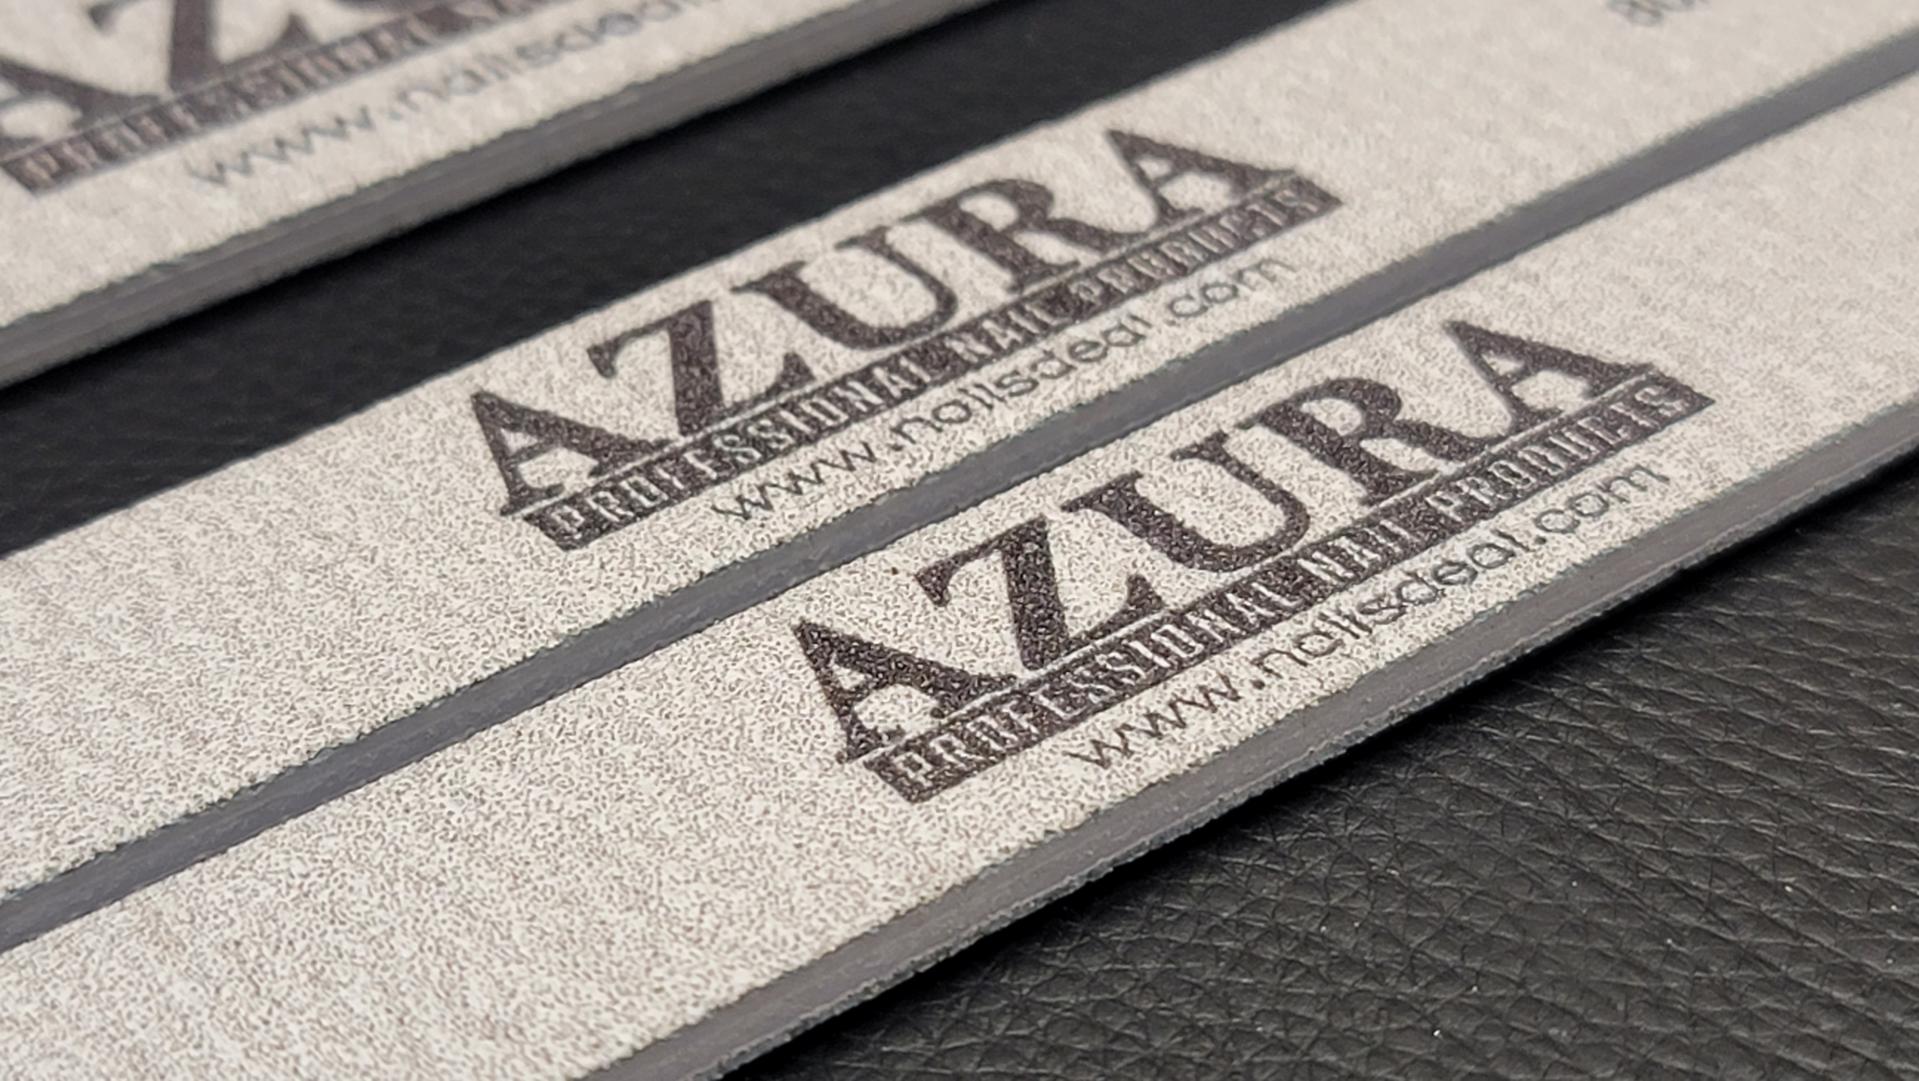 AZURA Professional Salon Board Nail File 80/80 | BUY 10 GET 1-Nail Files & Emery Boards-AZURA- Nail Supply American Gel Polish - Phuong Ni